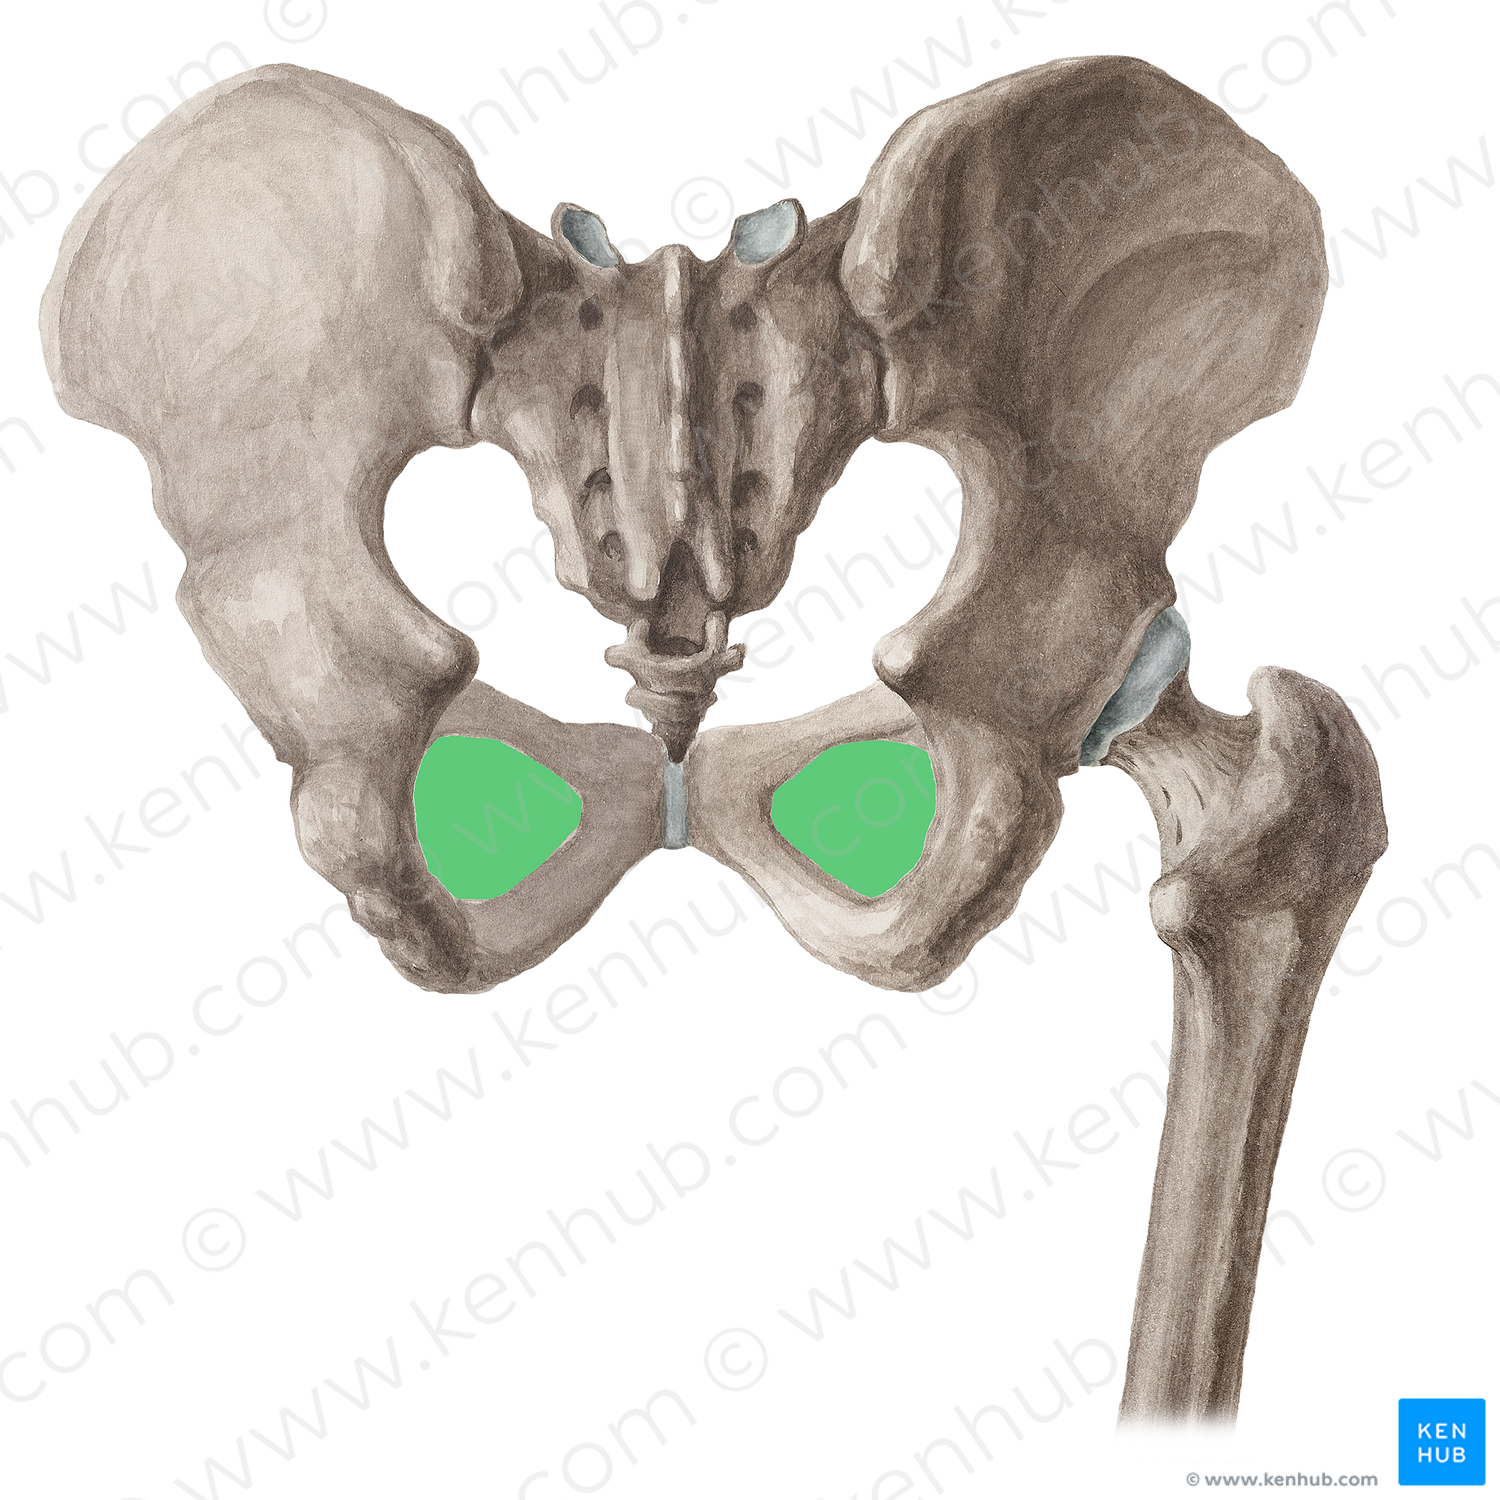 Obturator foramen of hip bone (#16063)